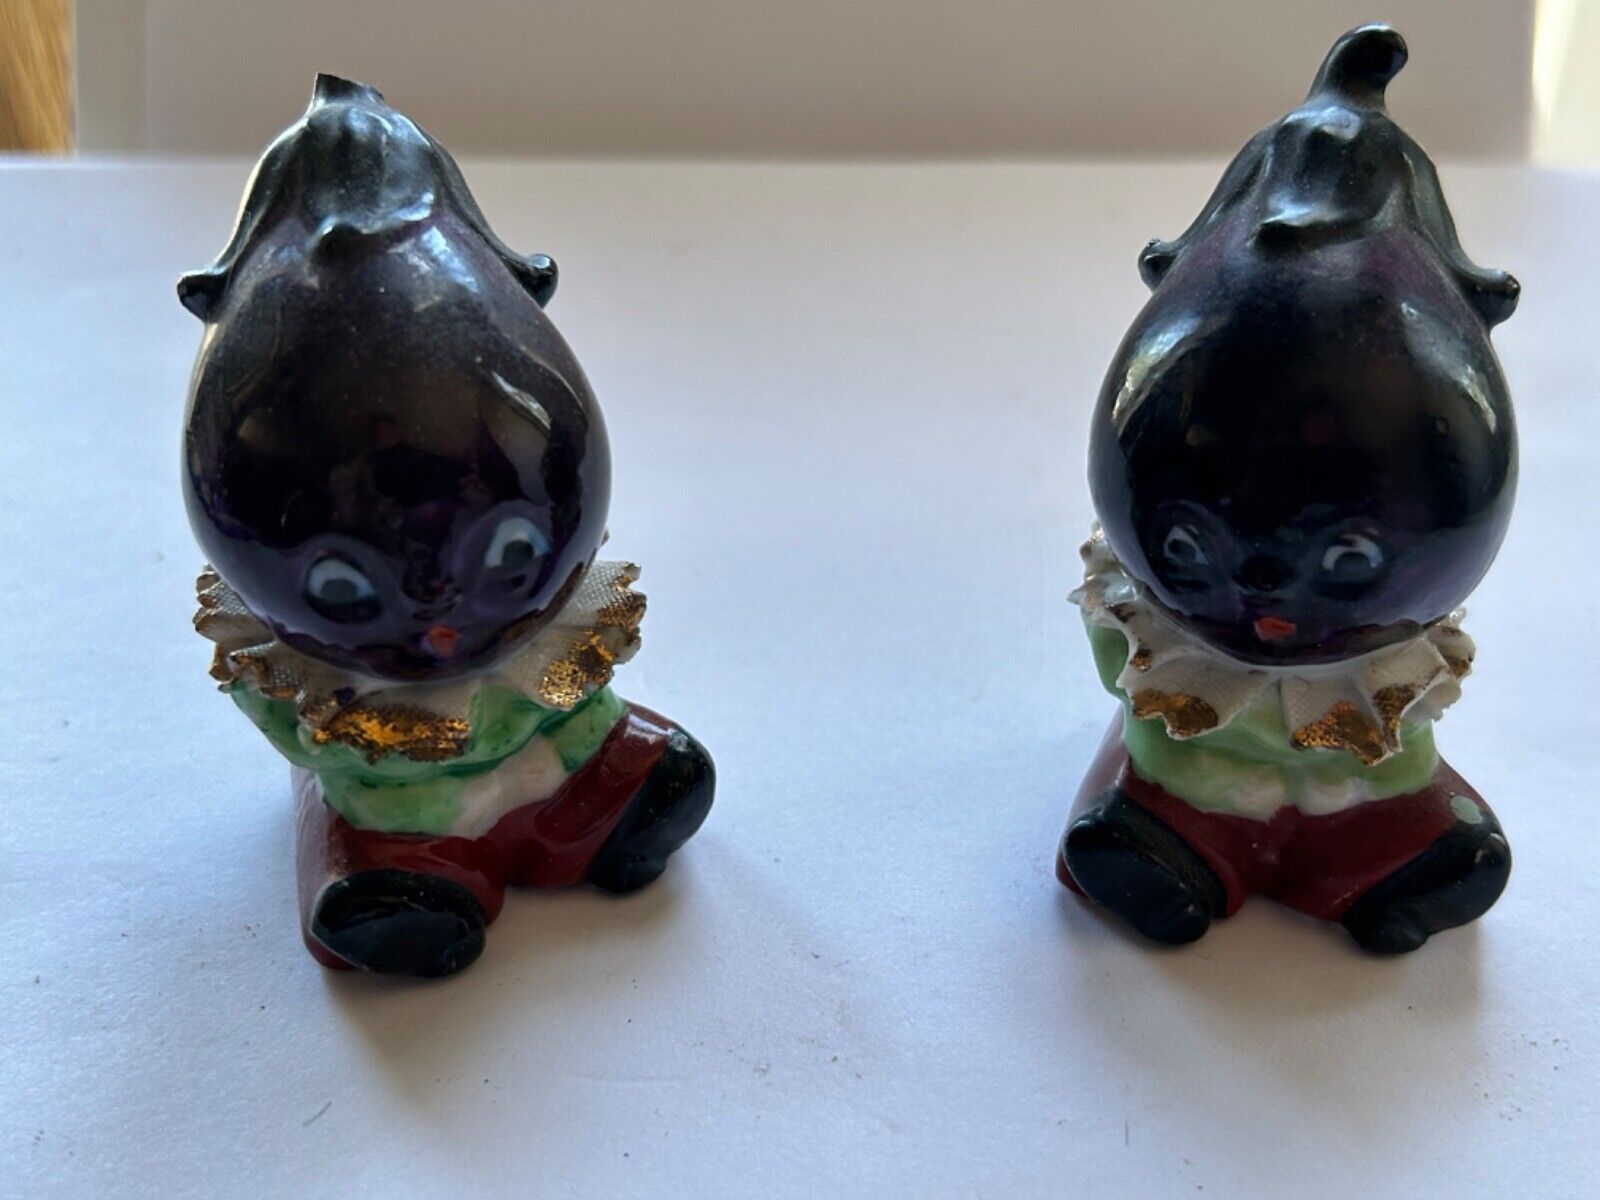 Vintage Anthropomorphic Eggplant Salt & Pepper Shakers - Japan Kitschy Cute